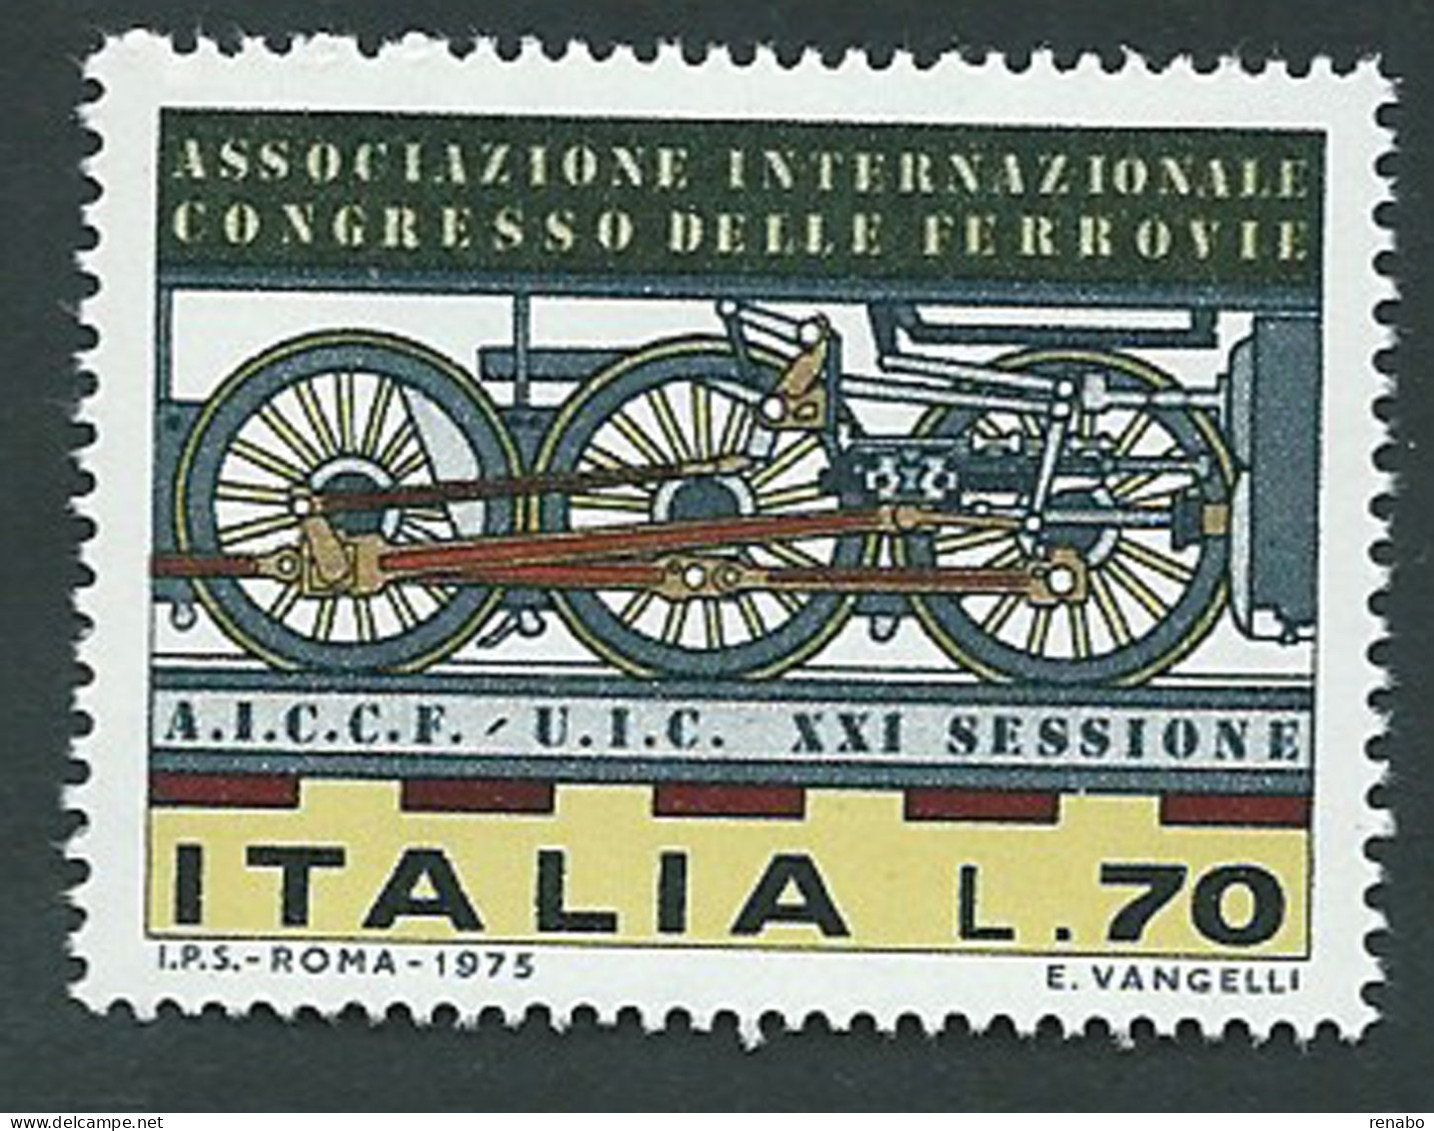 Italia, Italy, Italien, Italie 1975; Congresso Delle Ferrovie, Congress Of Railways. Serie Completa. New. - Trains